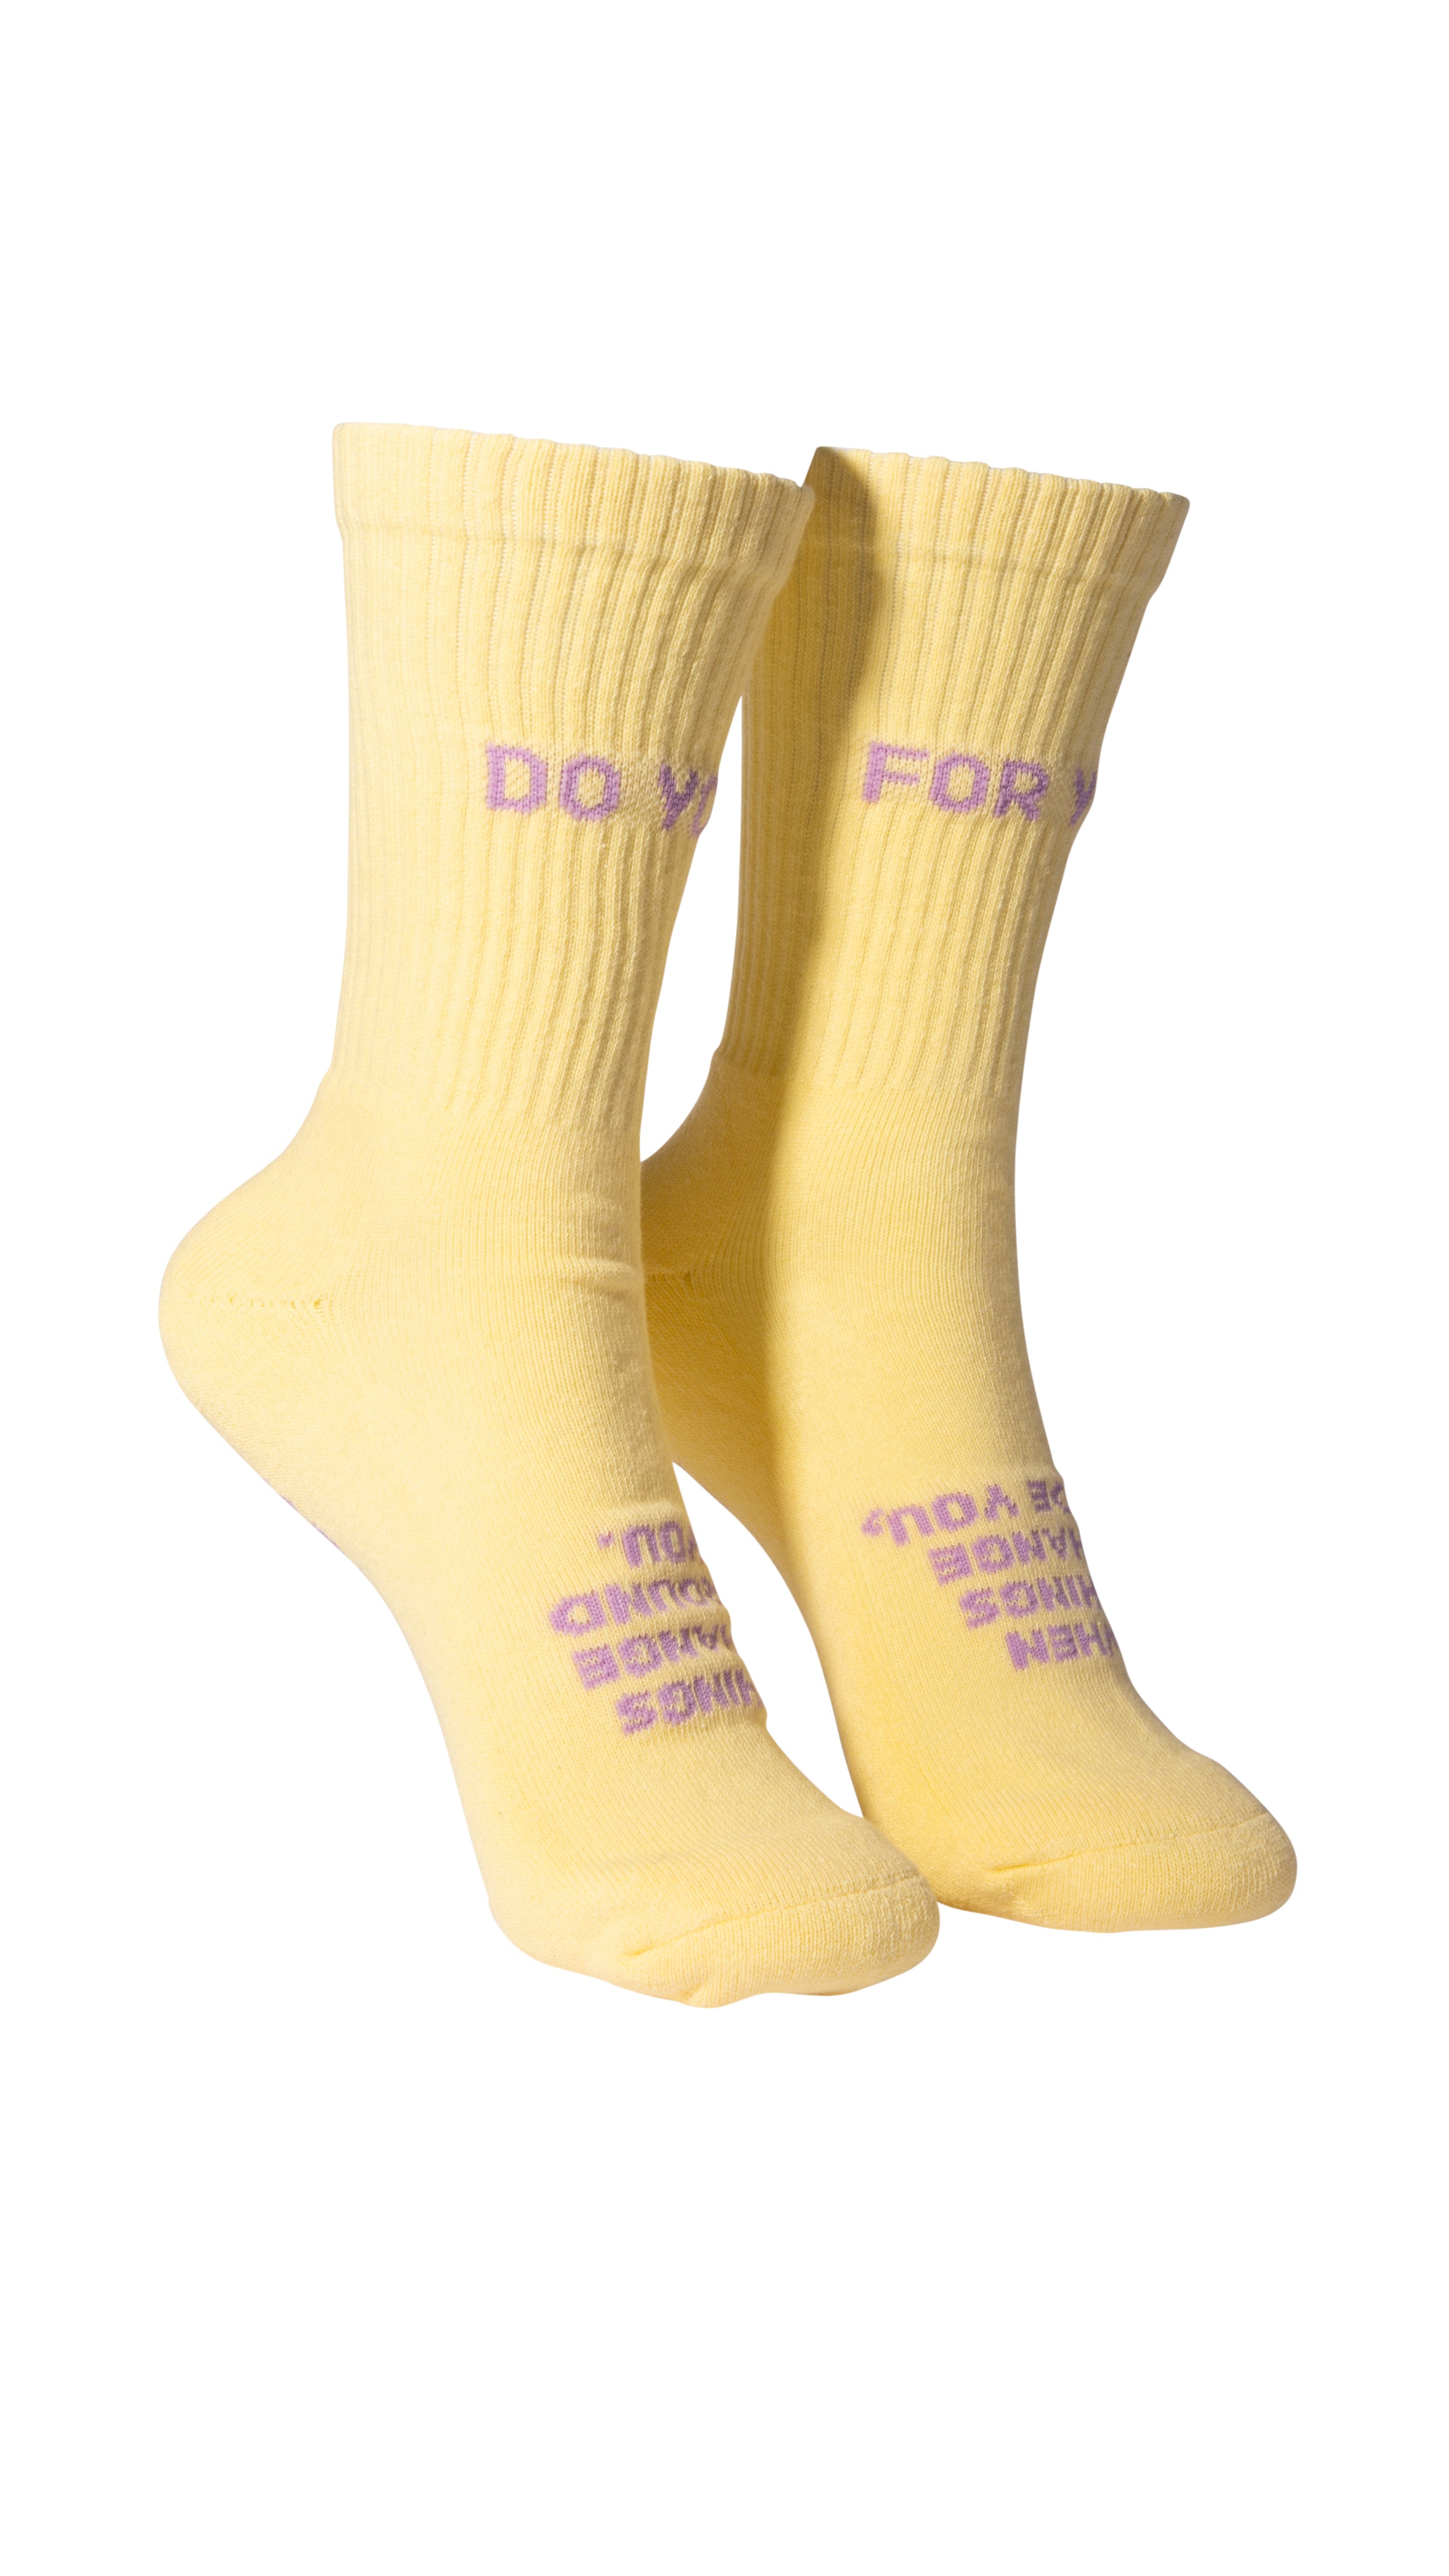 FOR YOU Women's Crew Socks - Pastel